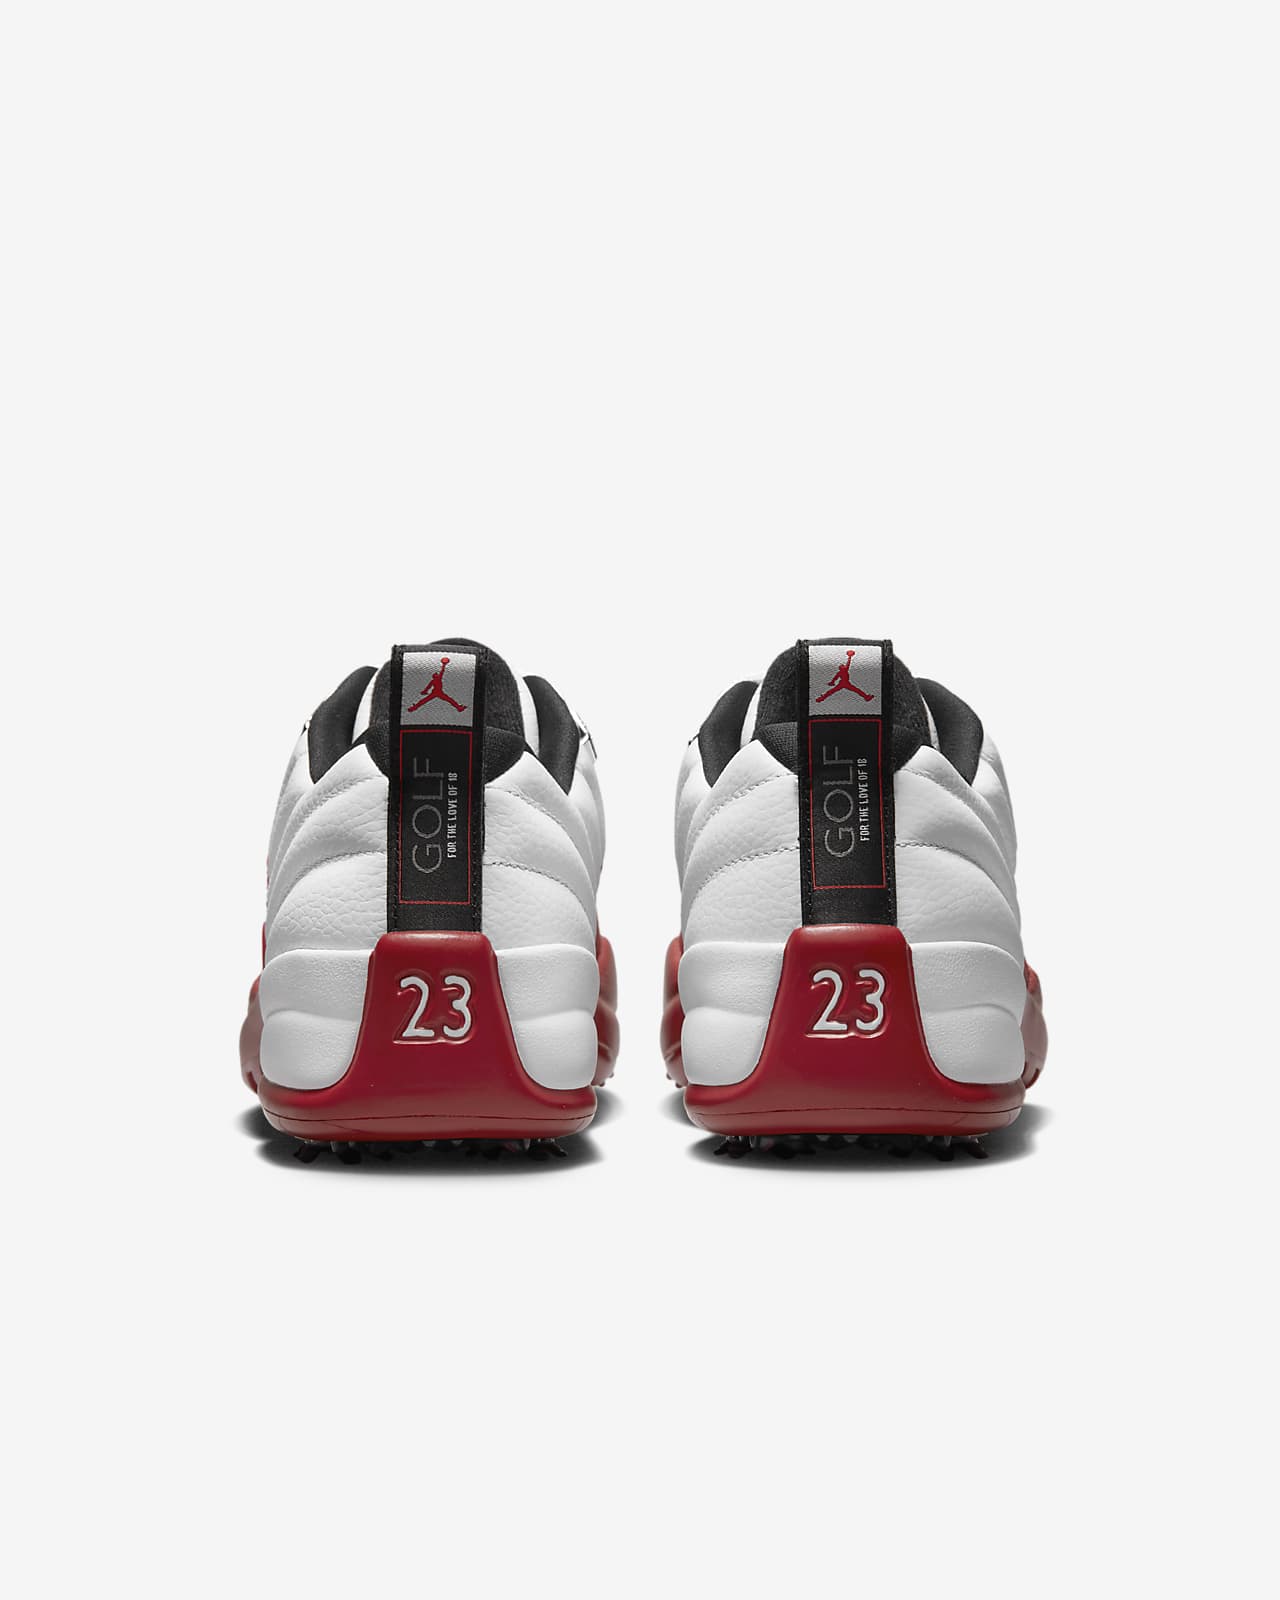 Air Jordan 12 Zapatillas de golf. Nike